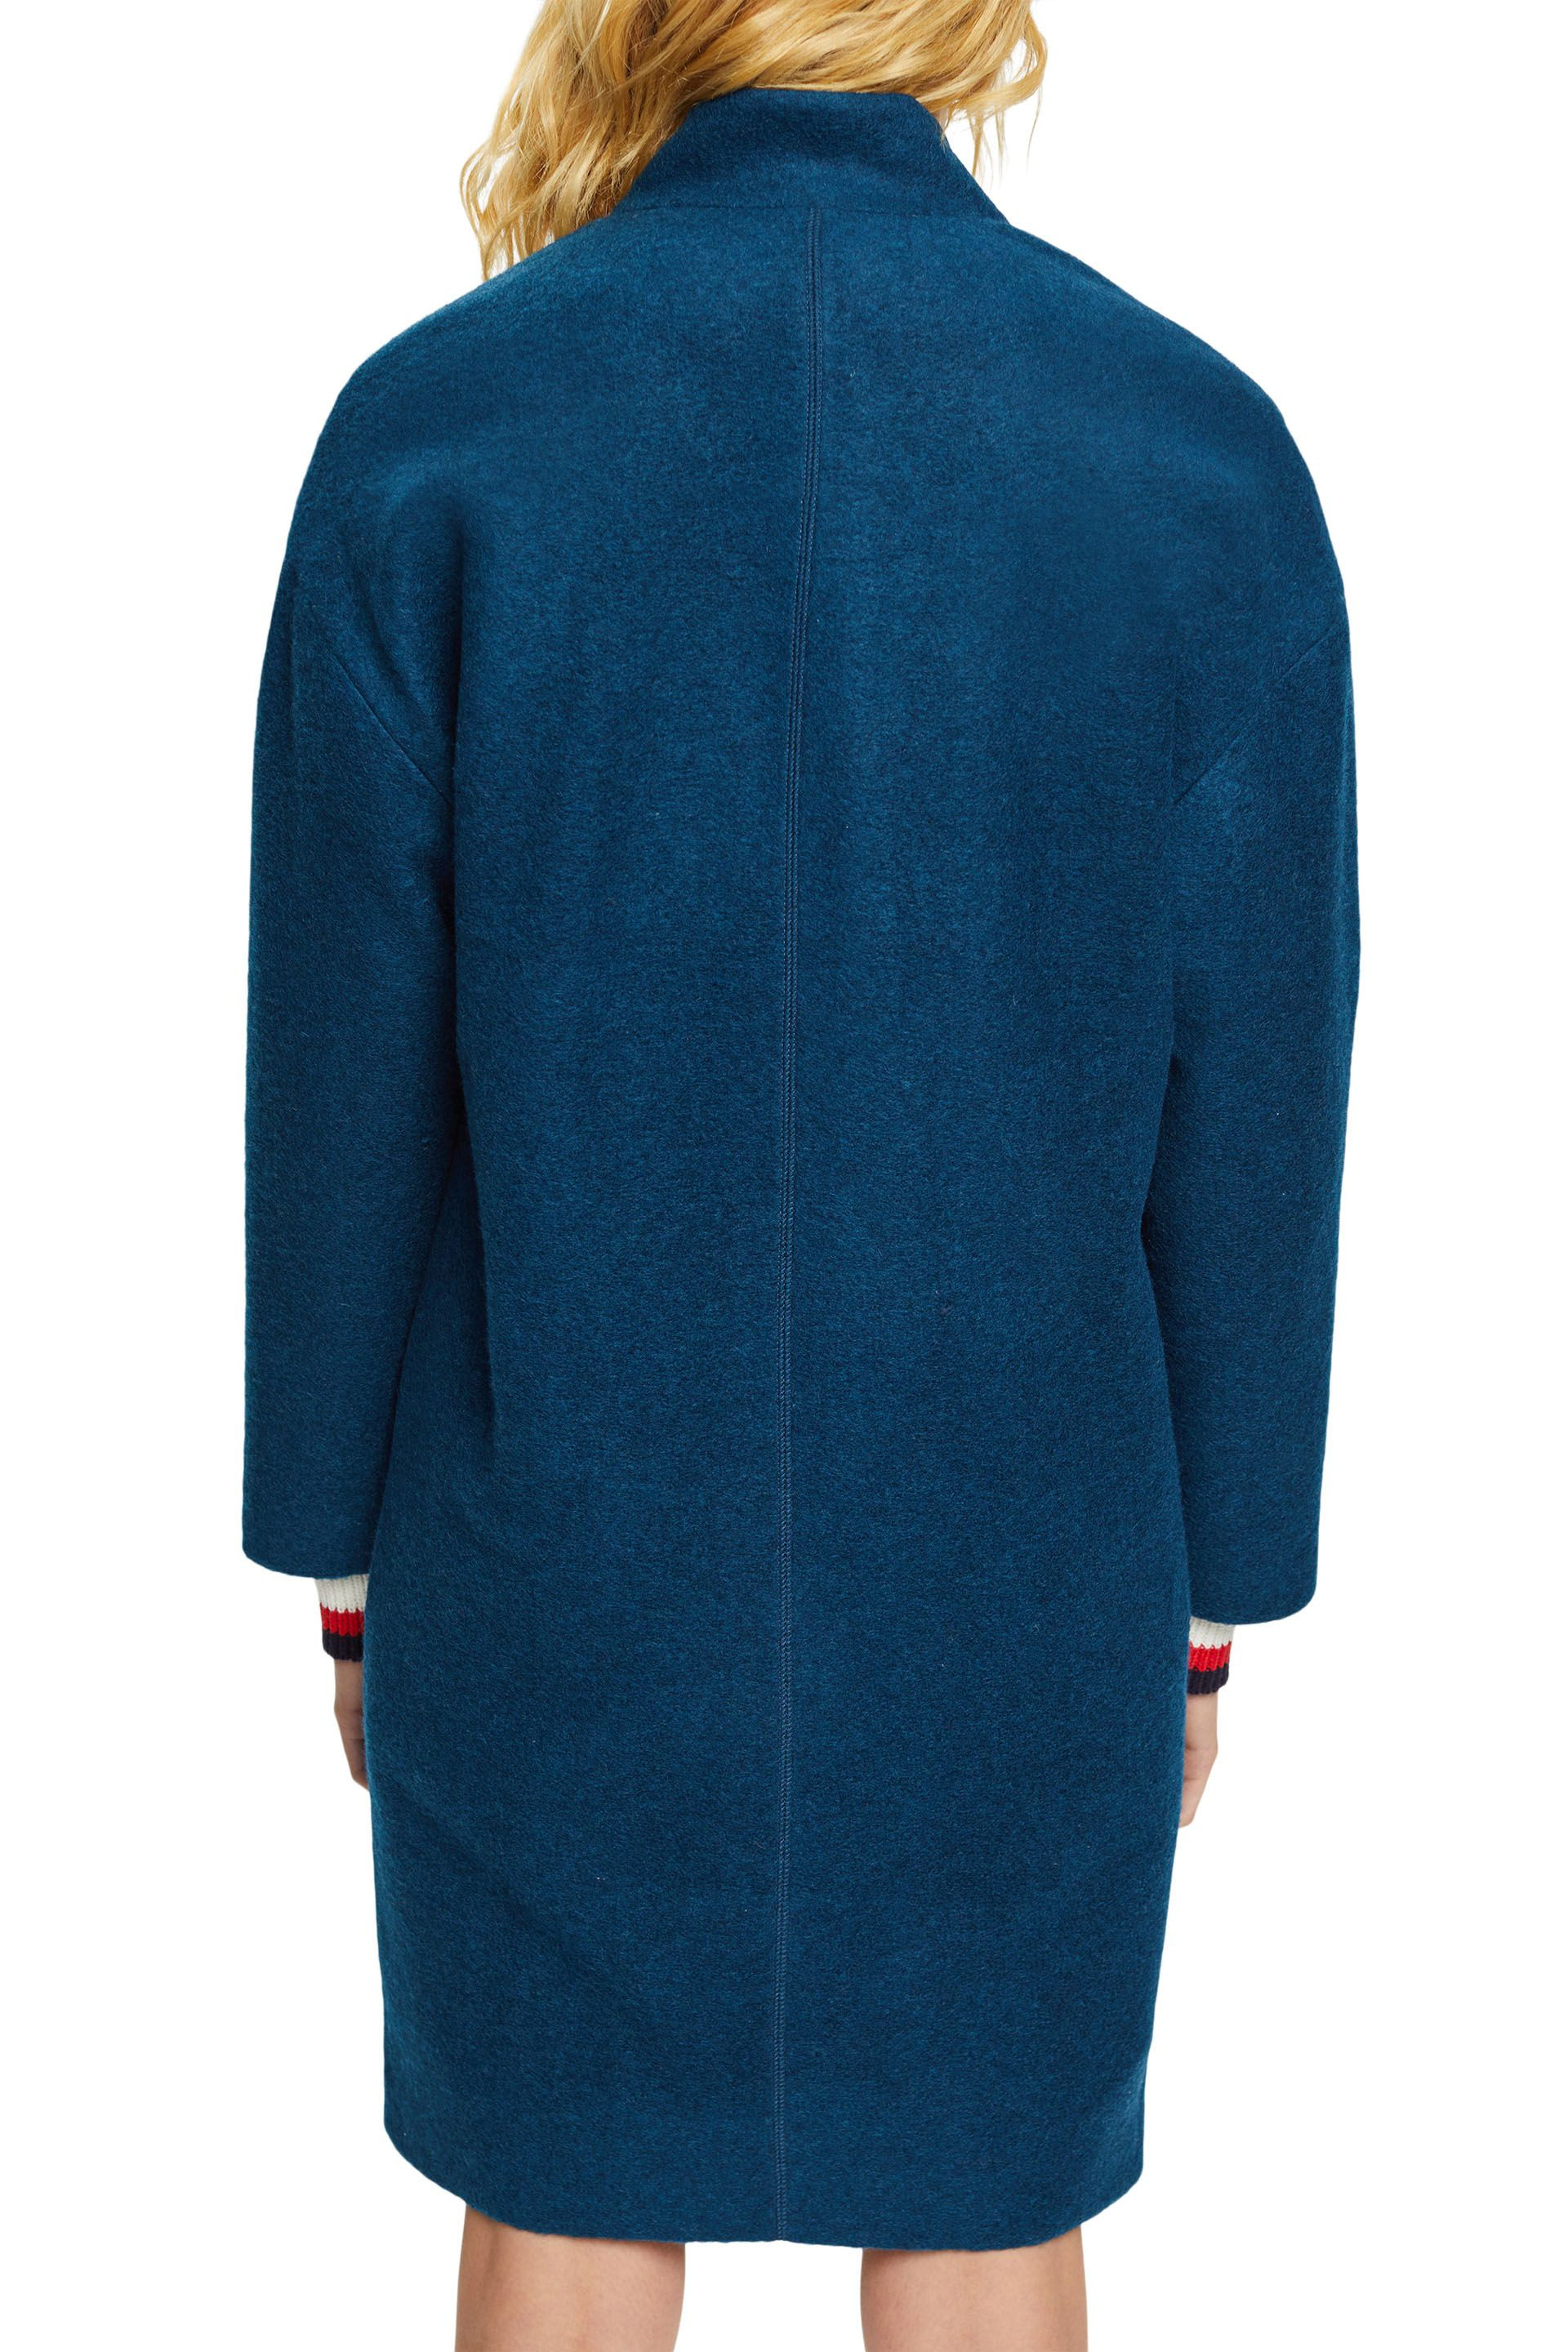 Cappotto in misto lana con collo revers, Blu, large image number 3